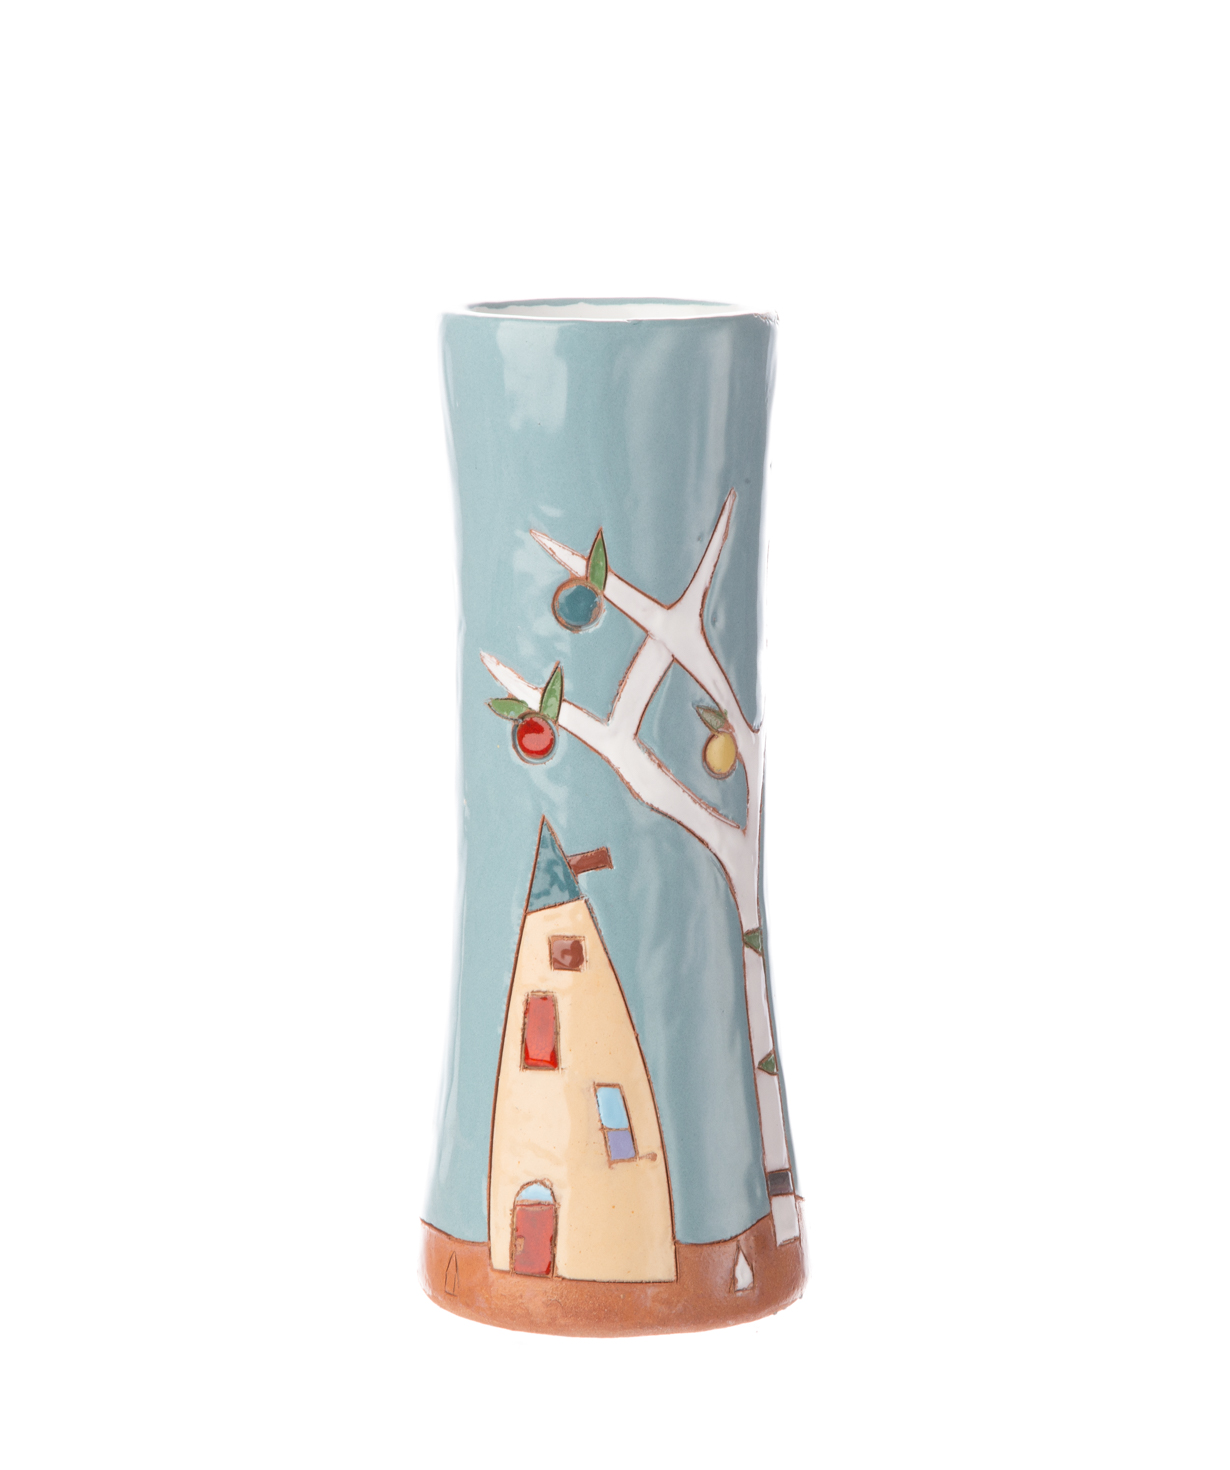 Vase `Nuard Ceramics` for flowers, city